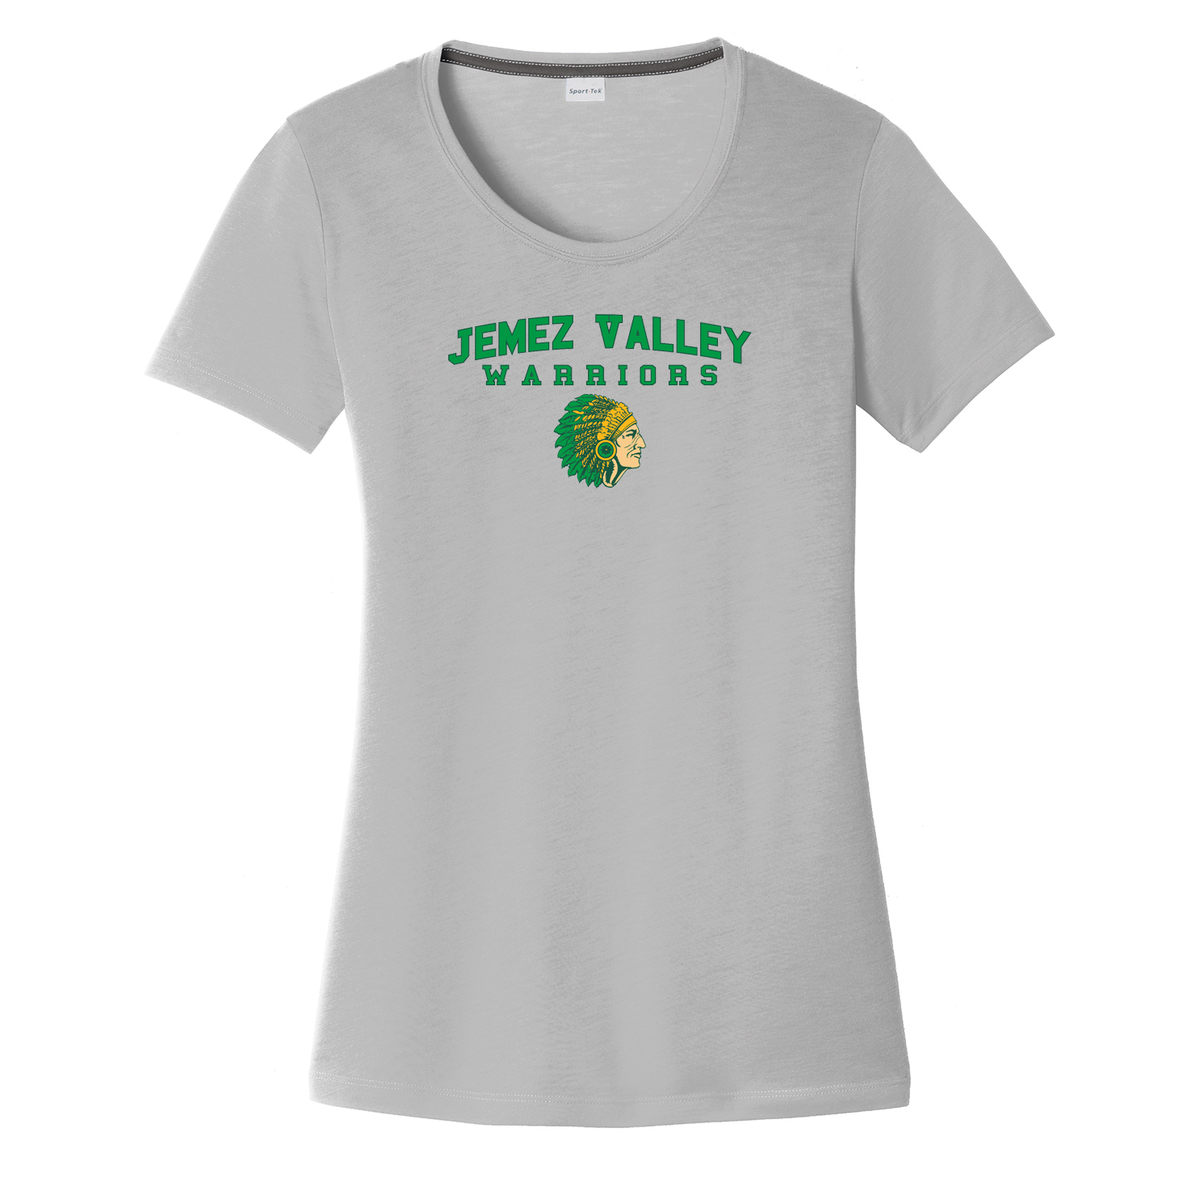 Jemez Valley Warriors Women's CottonTouch Performance T-Shirt